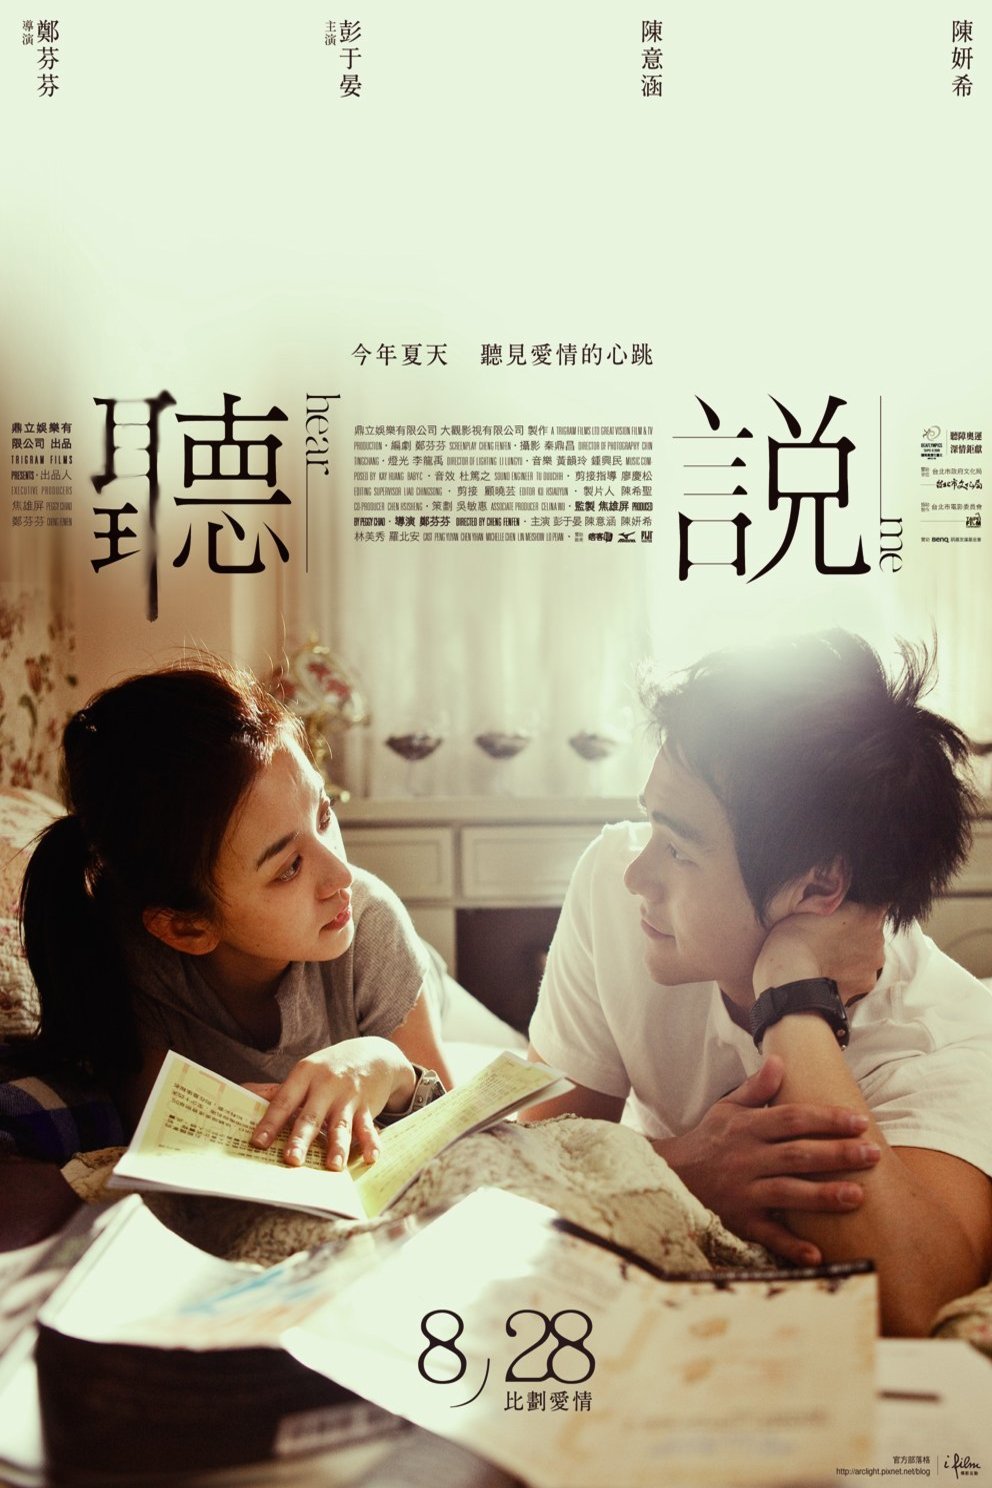 L'affiche originale du film Hear Me en mandarin